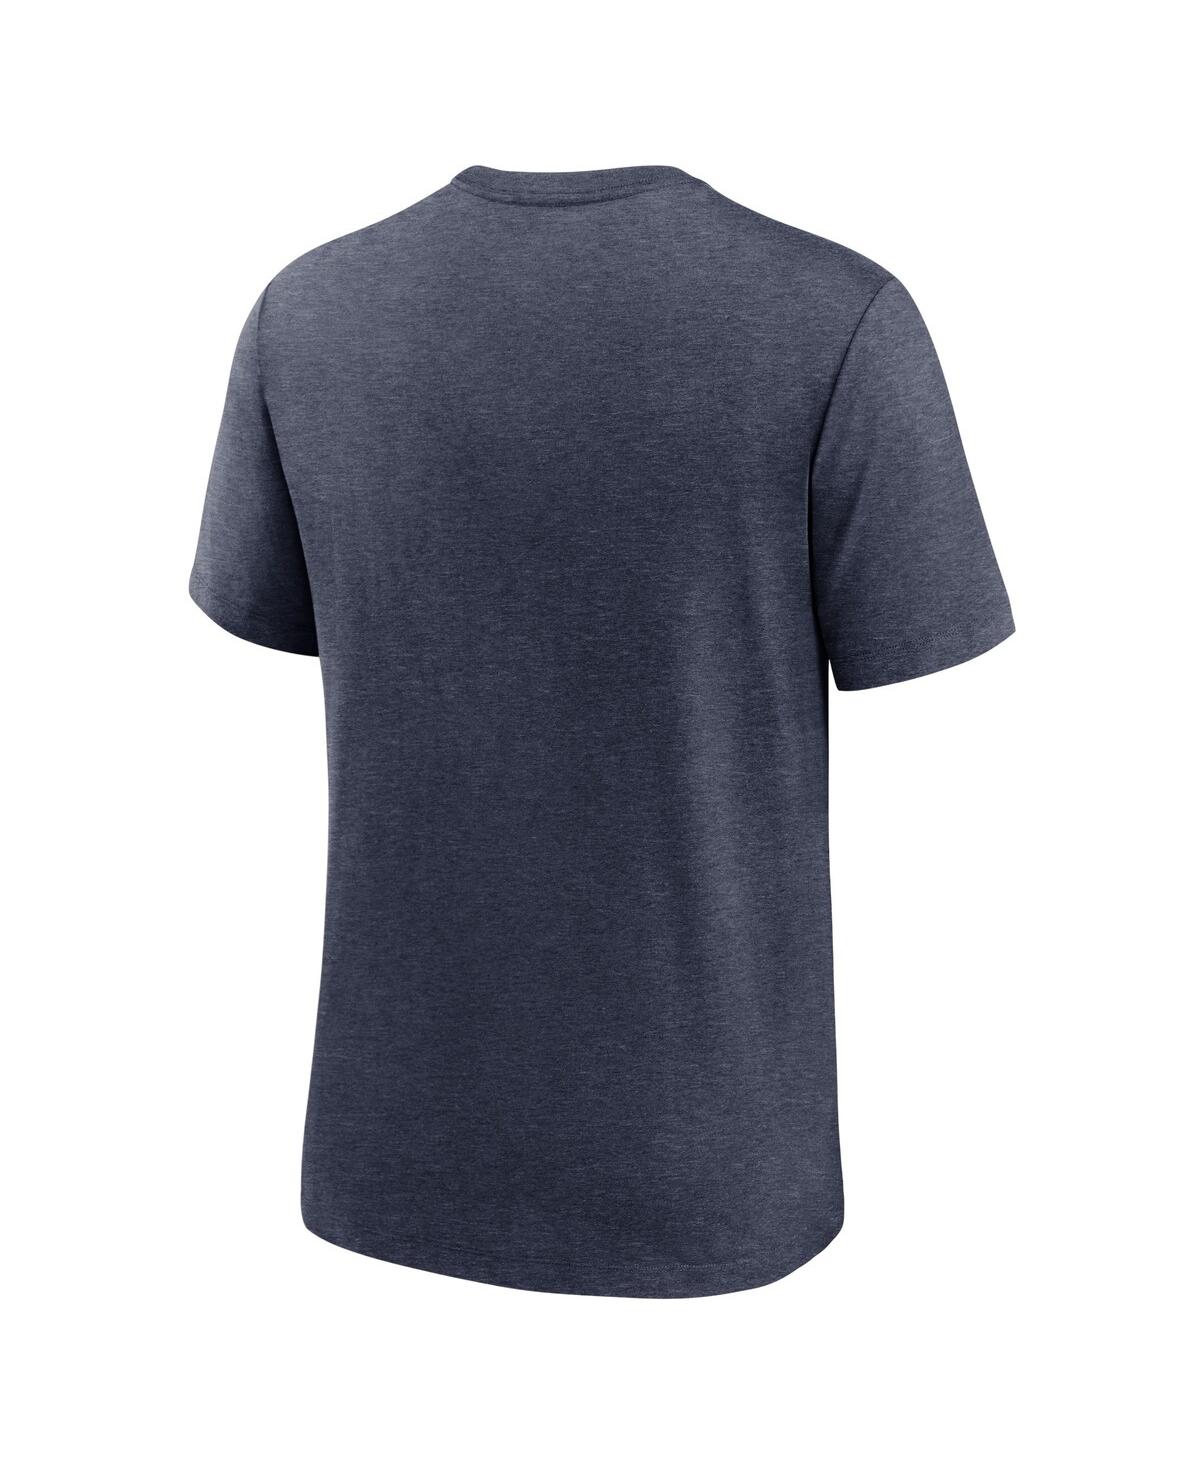 Shop Nike Men's  Heather Navy Milwaukee Brewers Swing Big Tri-blend T-shirt